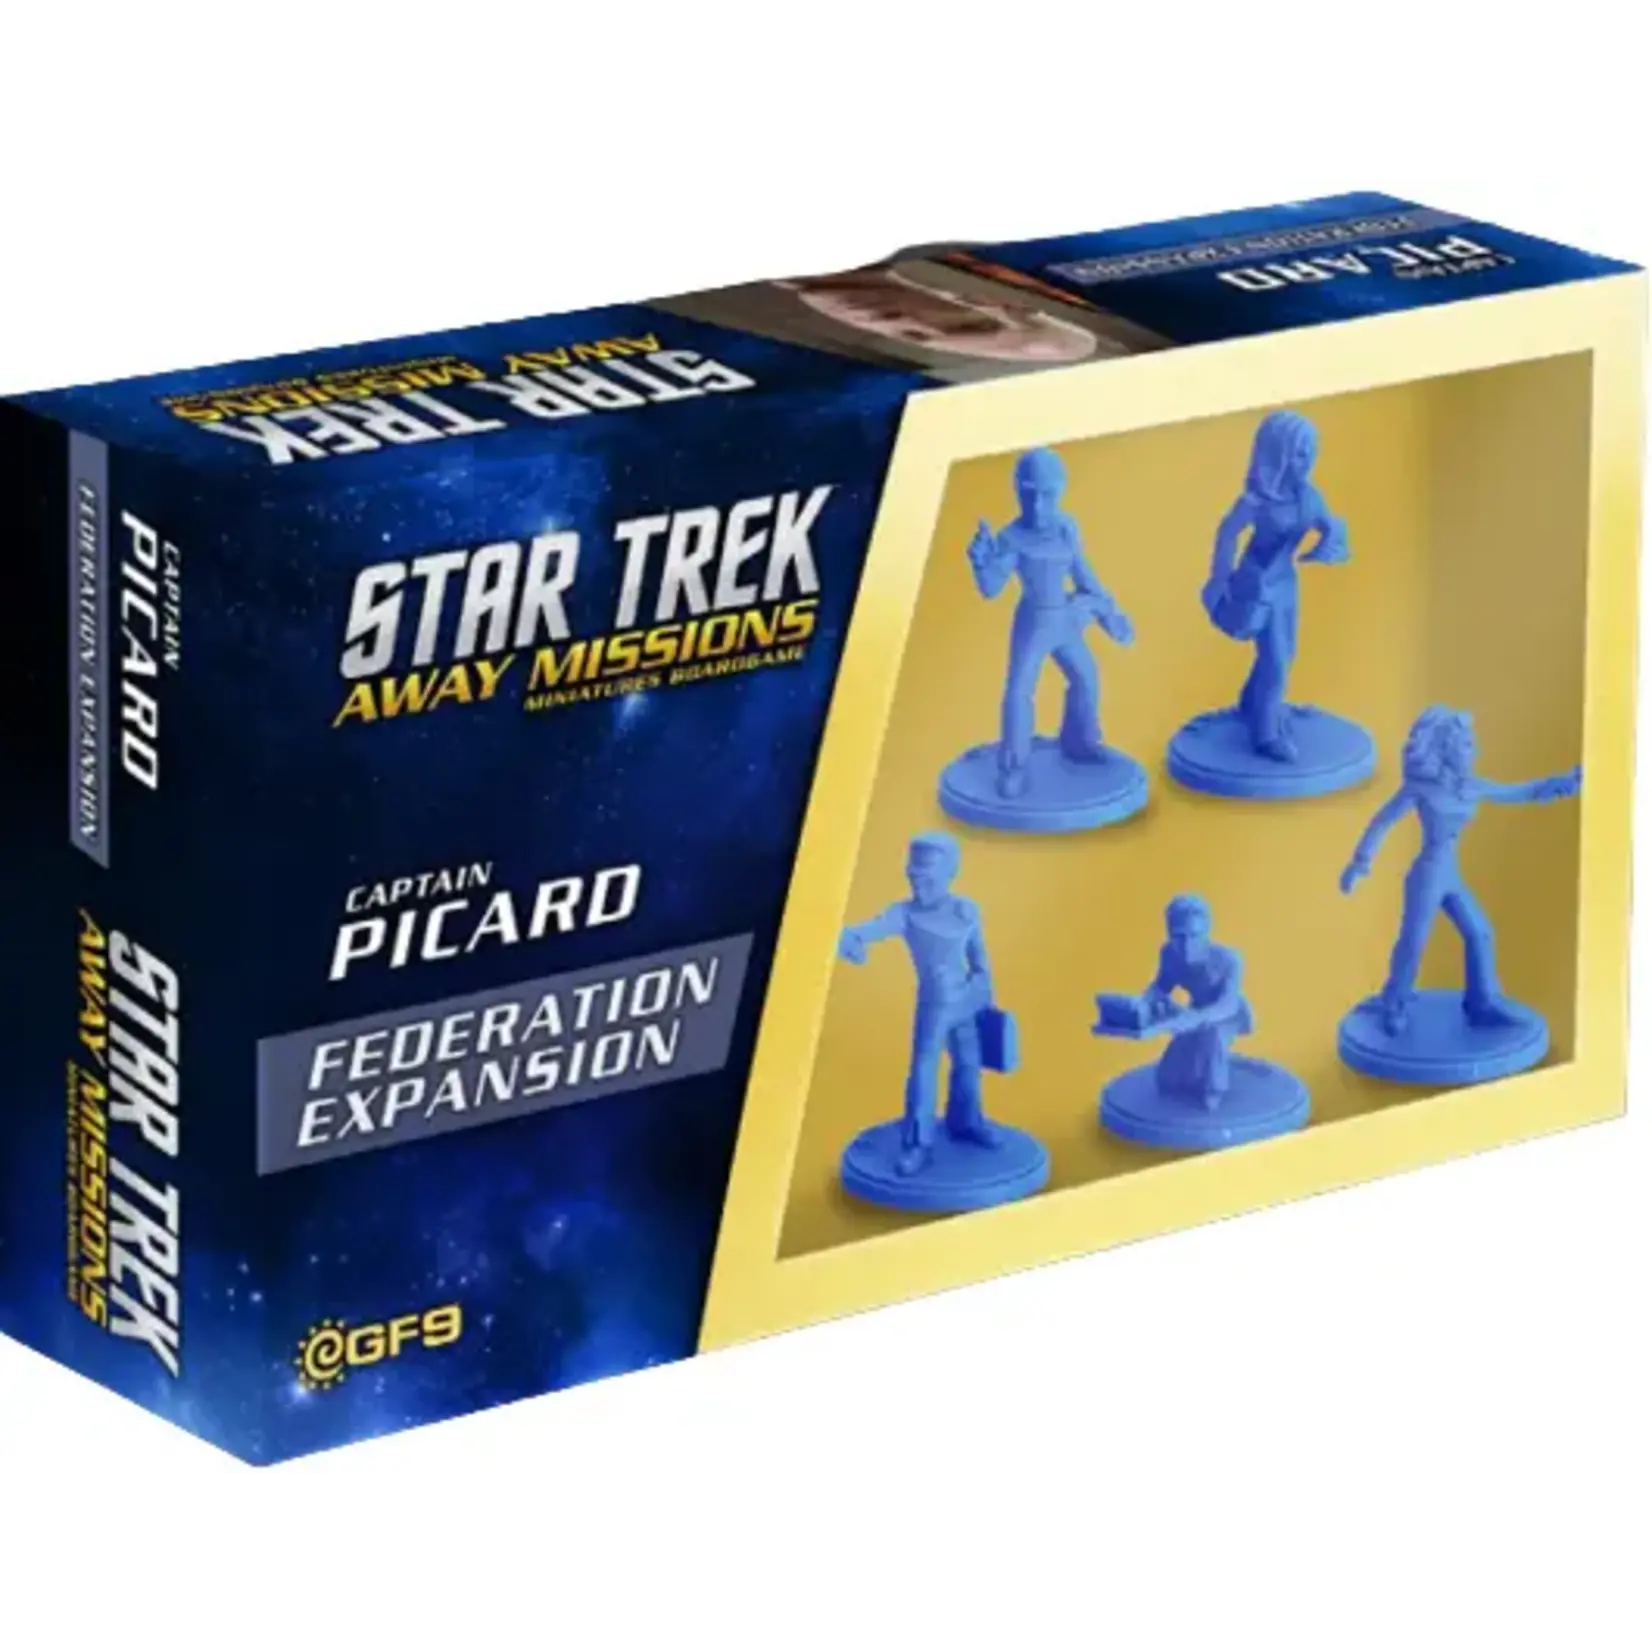 GaleForce Nine Star Trek Away Missions Captain Picard Expansion